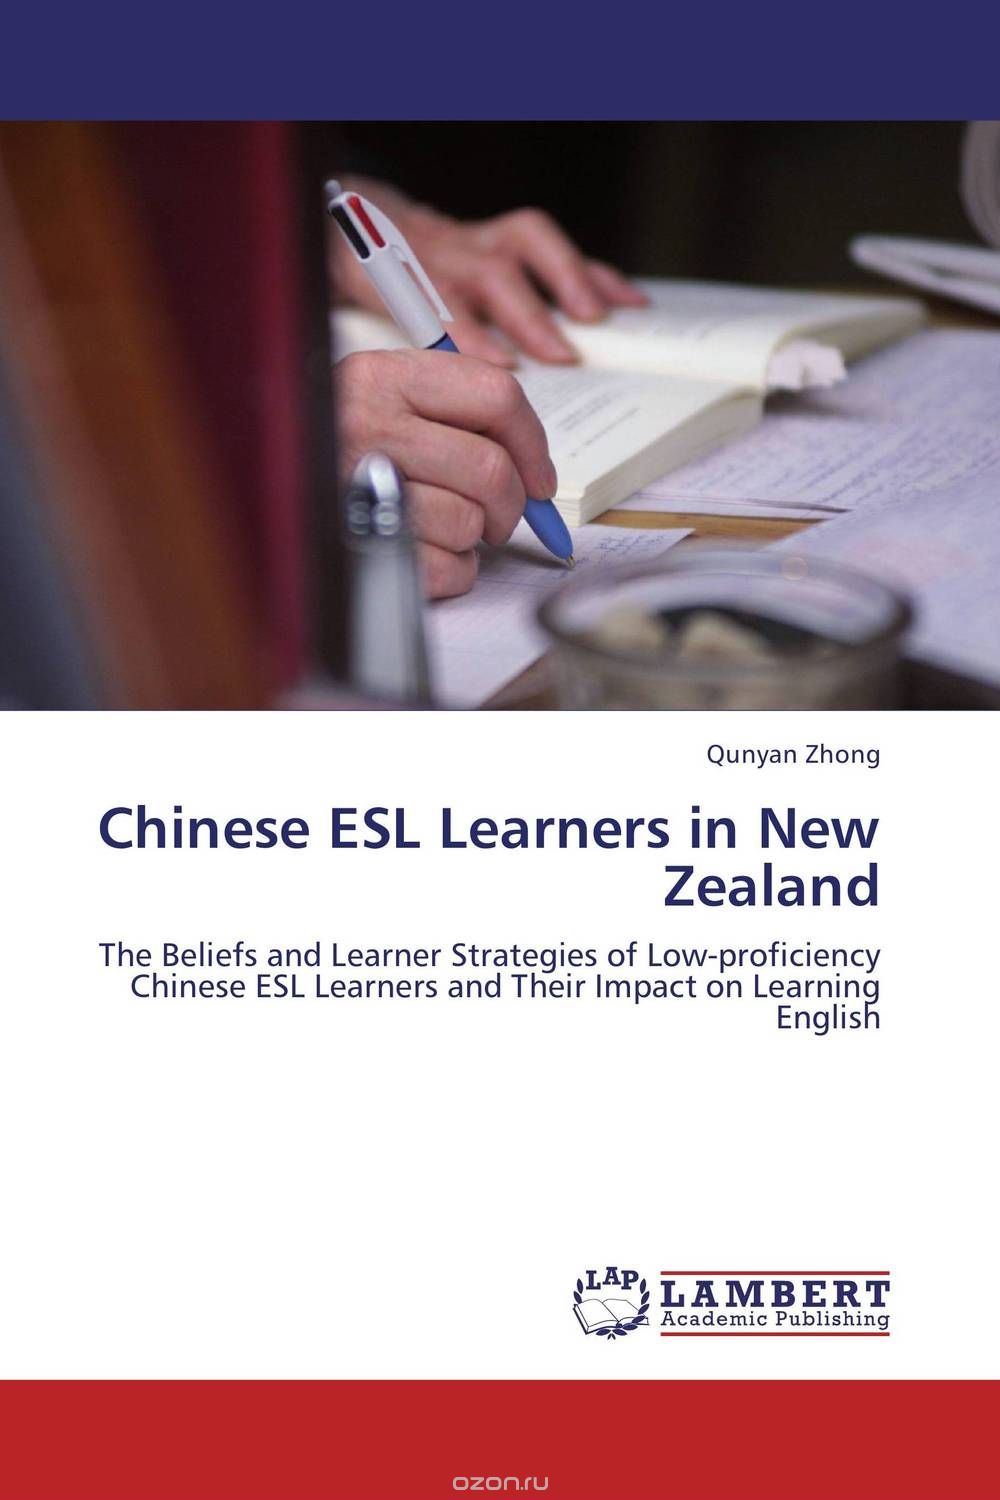 Скачать книгу "Chinese ESL Learners in New Zealand"